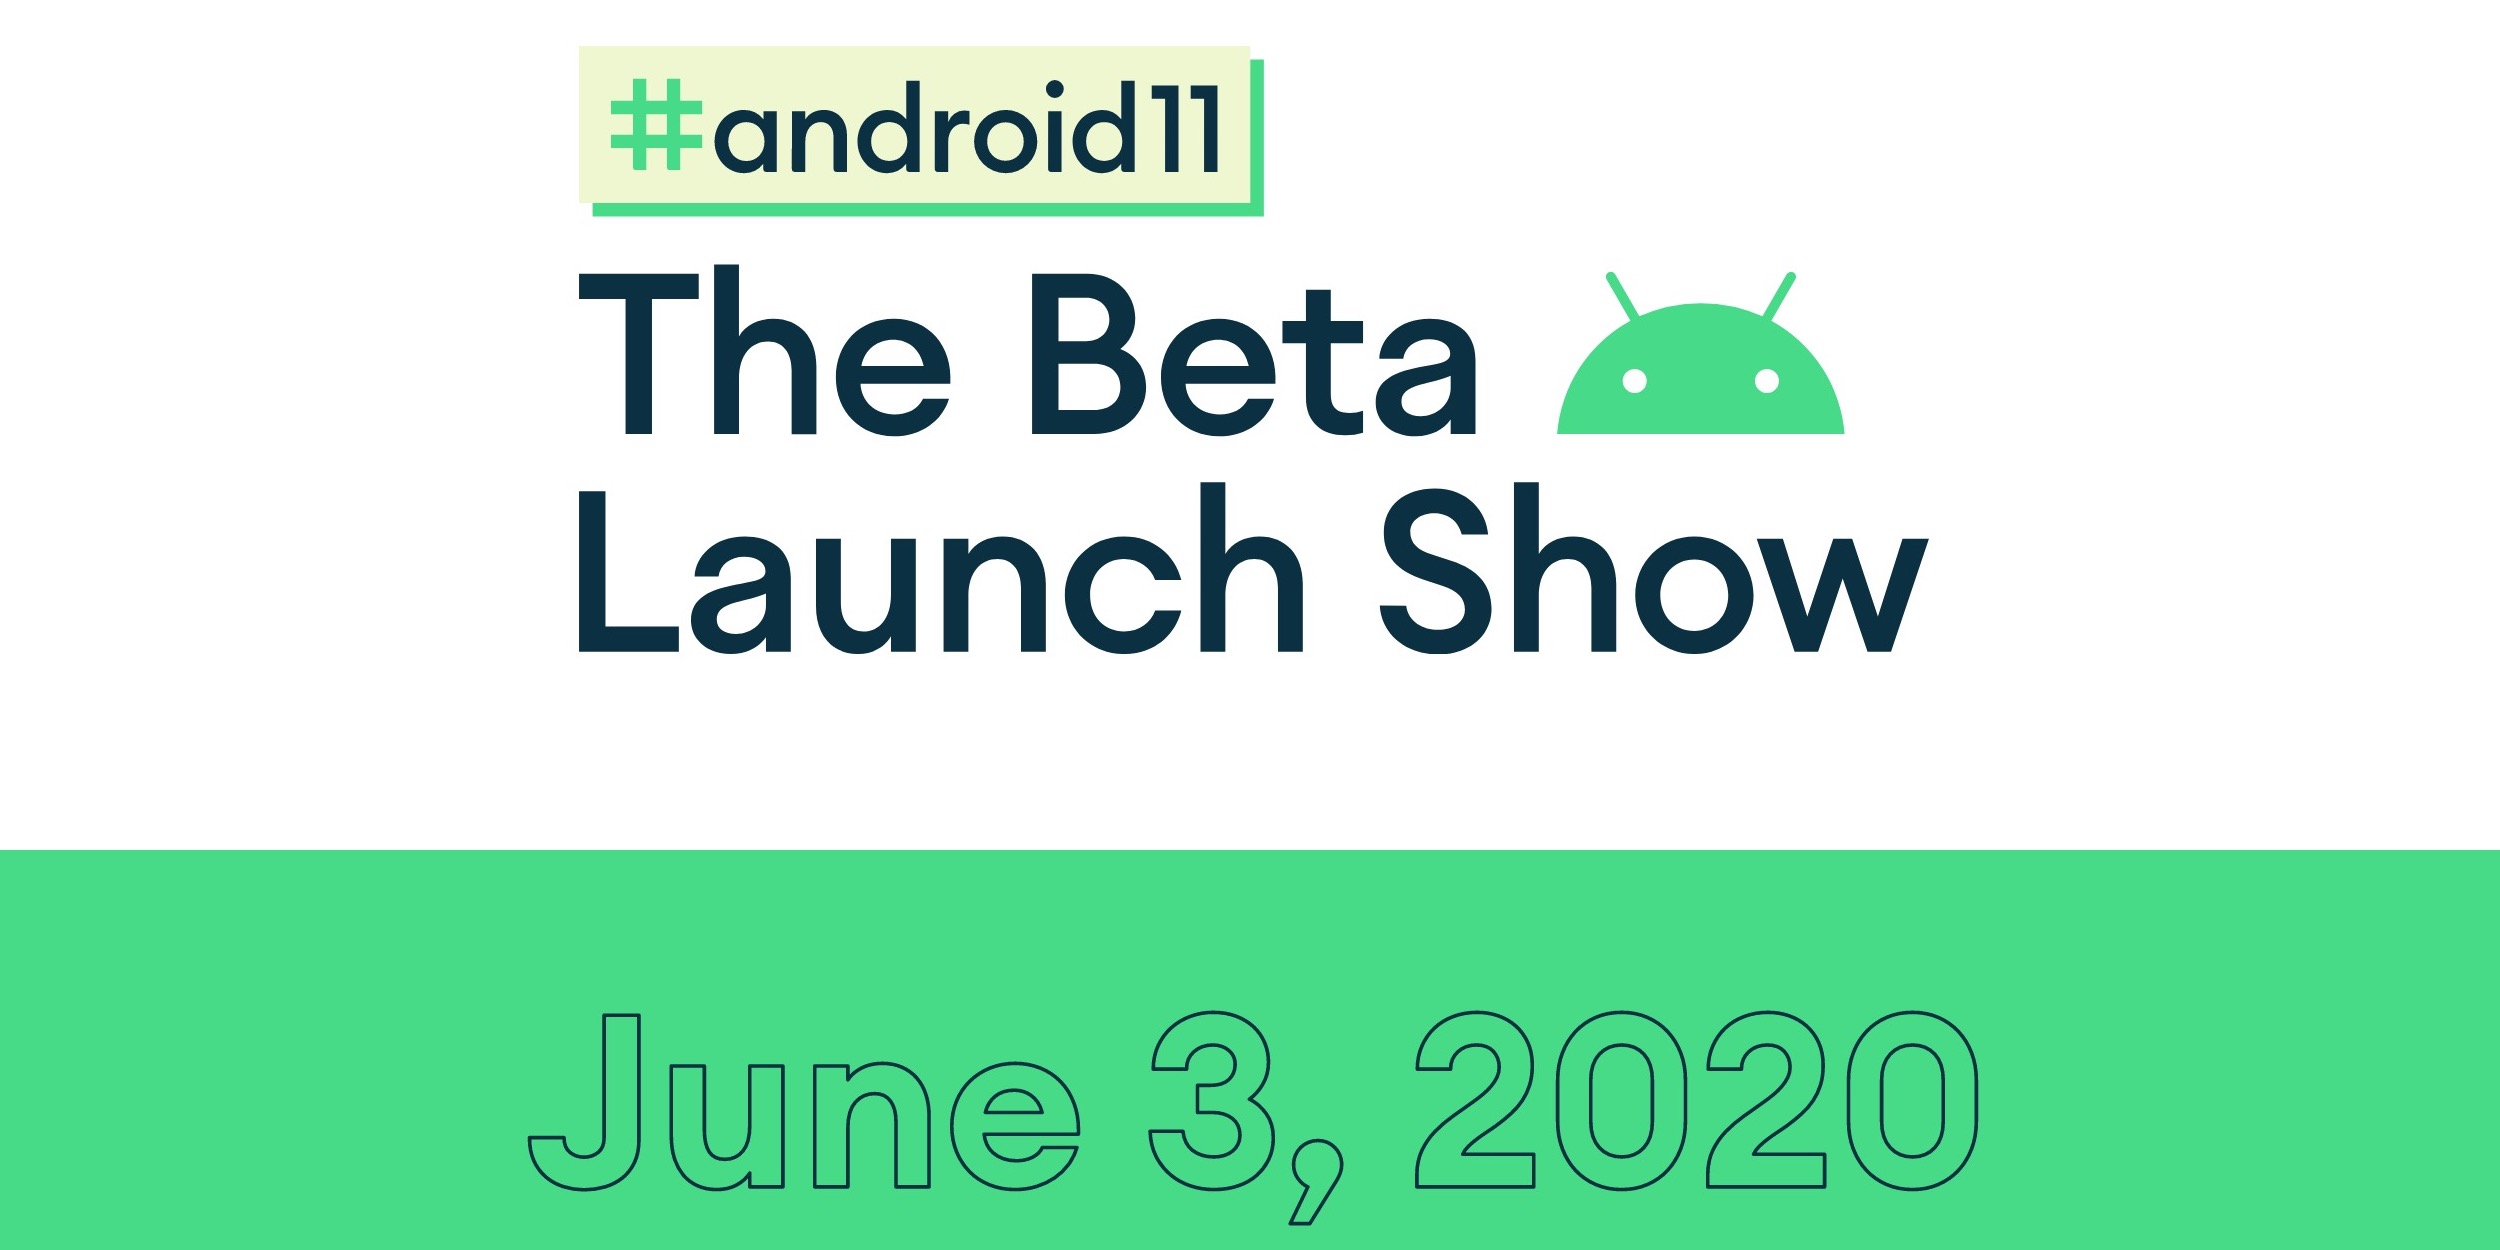 android 11 beta launch show1 | Technea.gr - Χρήσιμα νέα τεχνολογίας